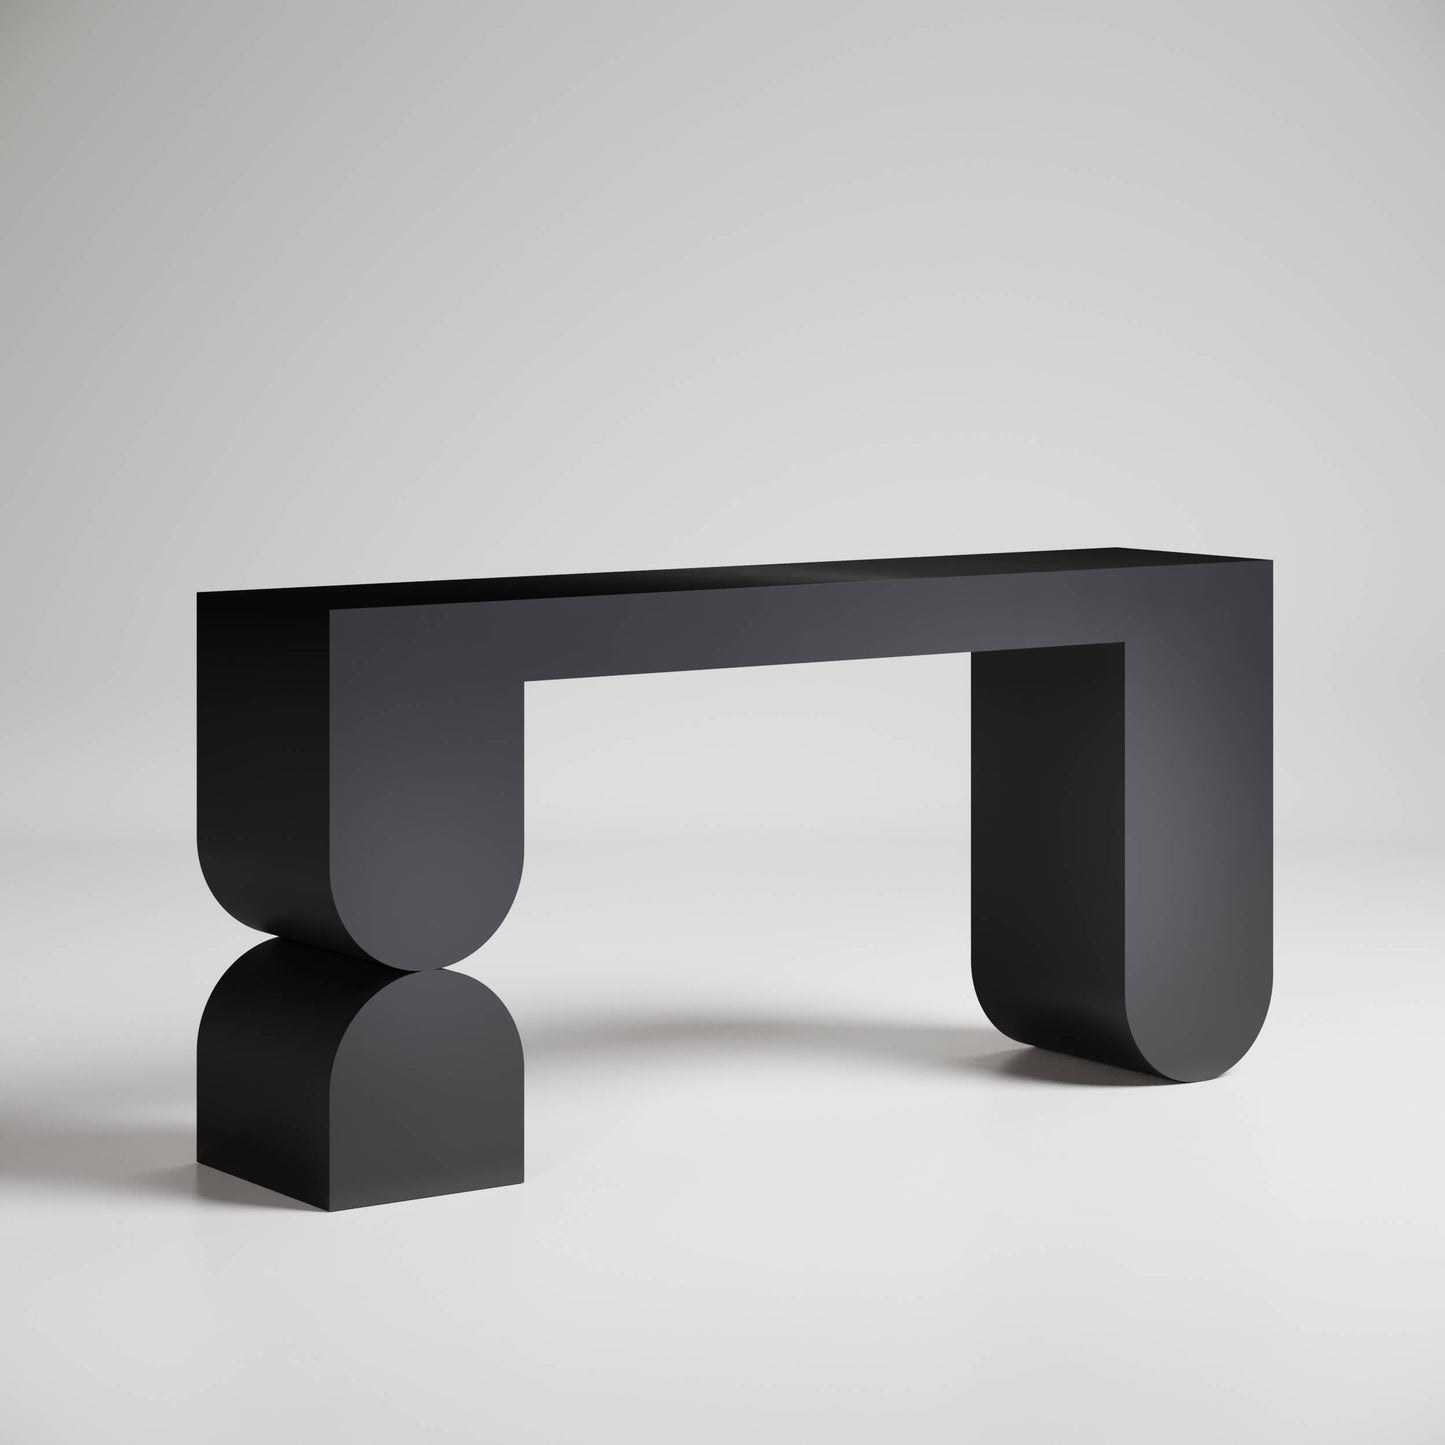 Black sculptural console table